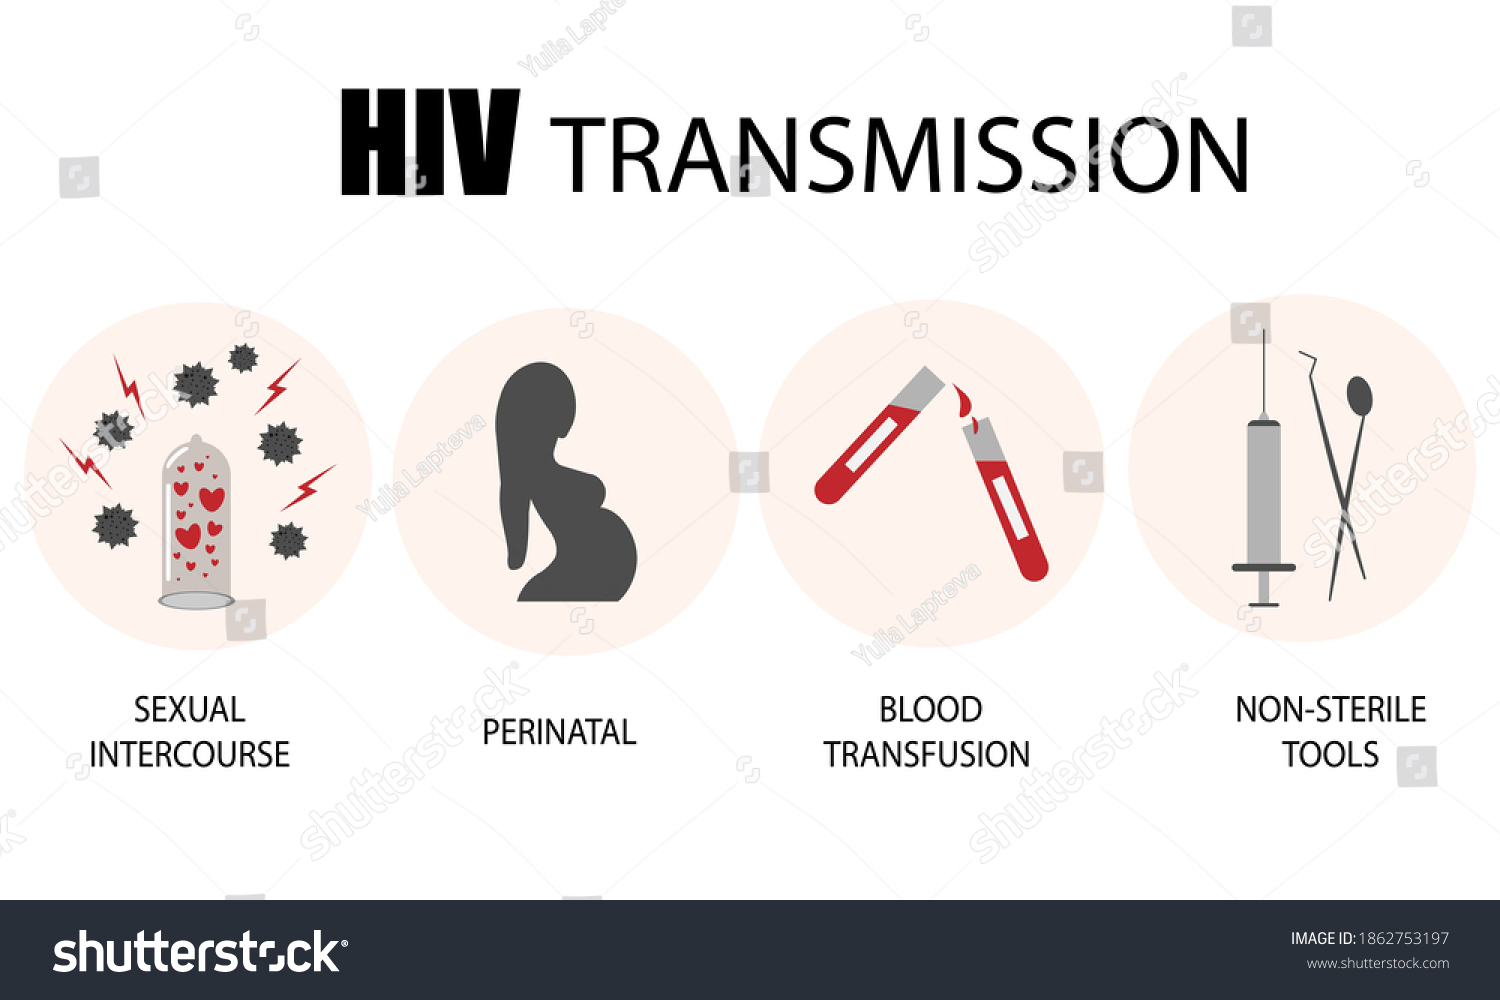 3,346 Aids transmission Images, Stock Photos & Vectors | Shutterstock